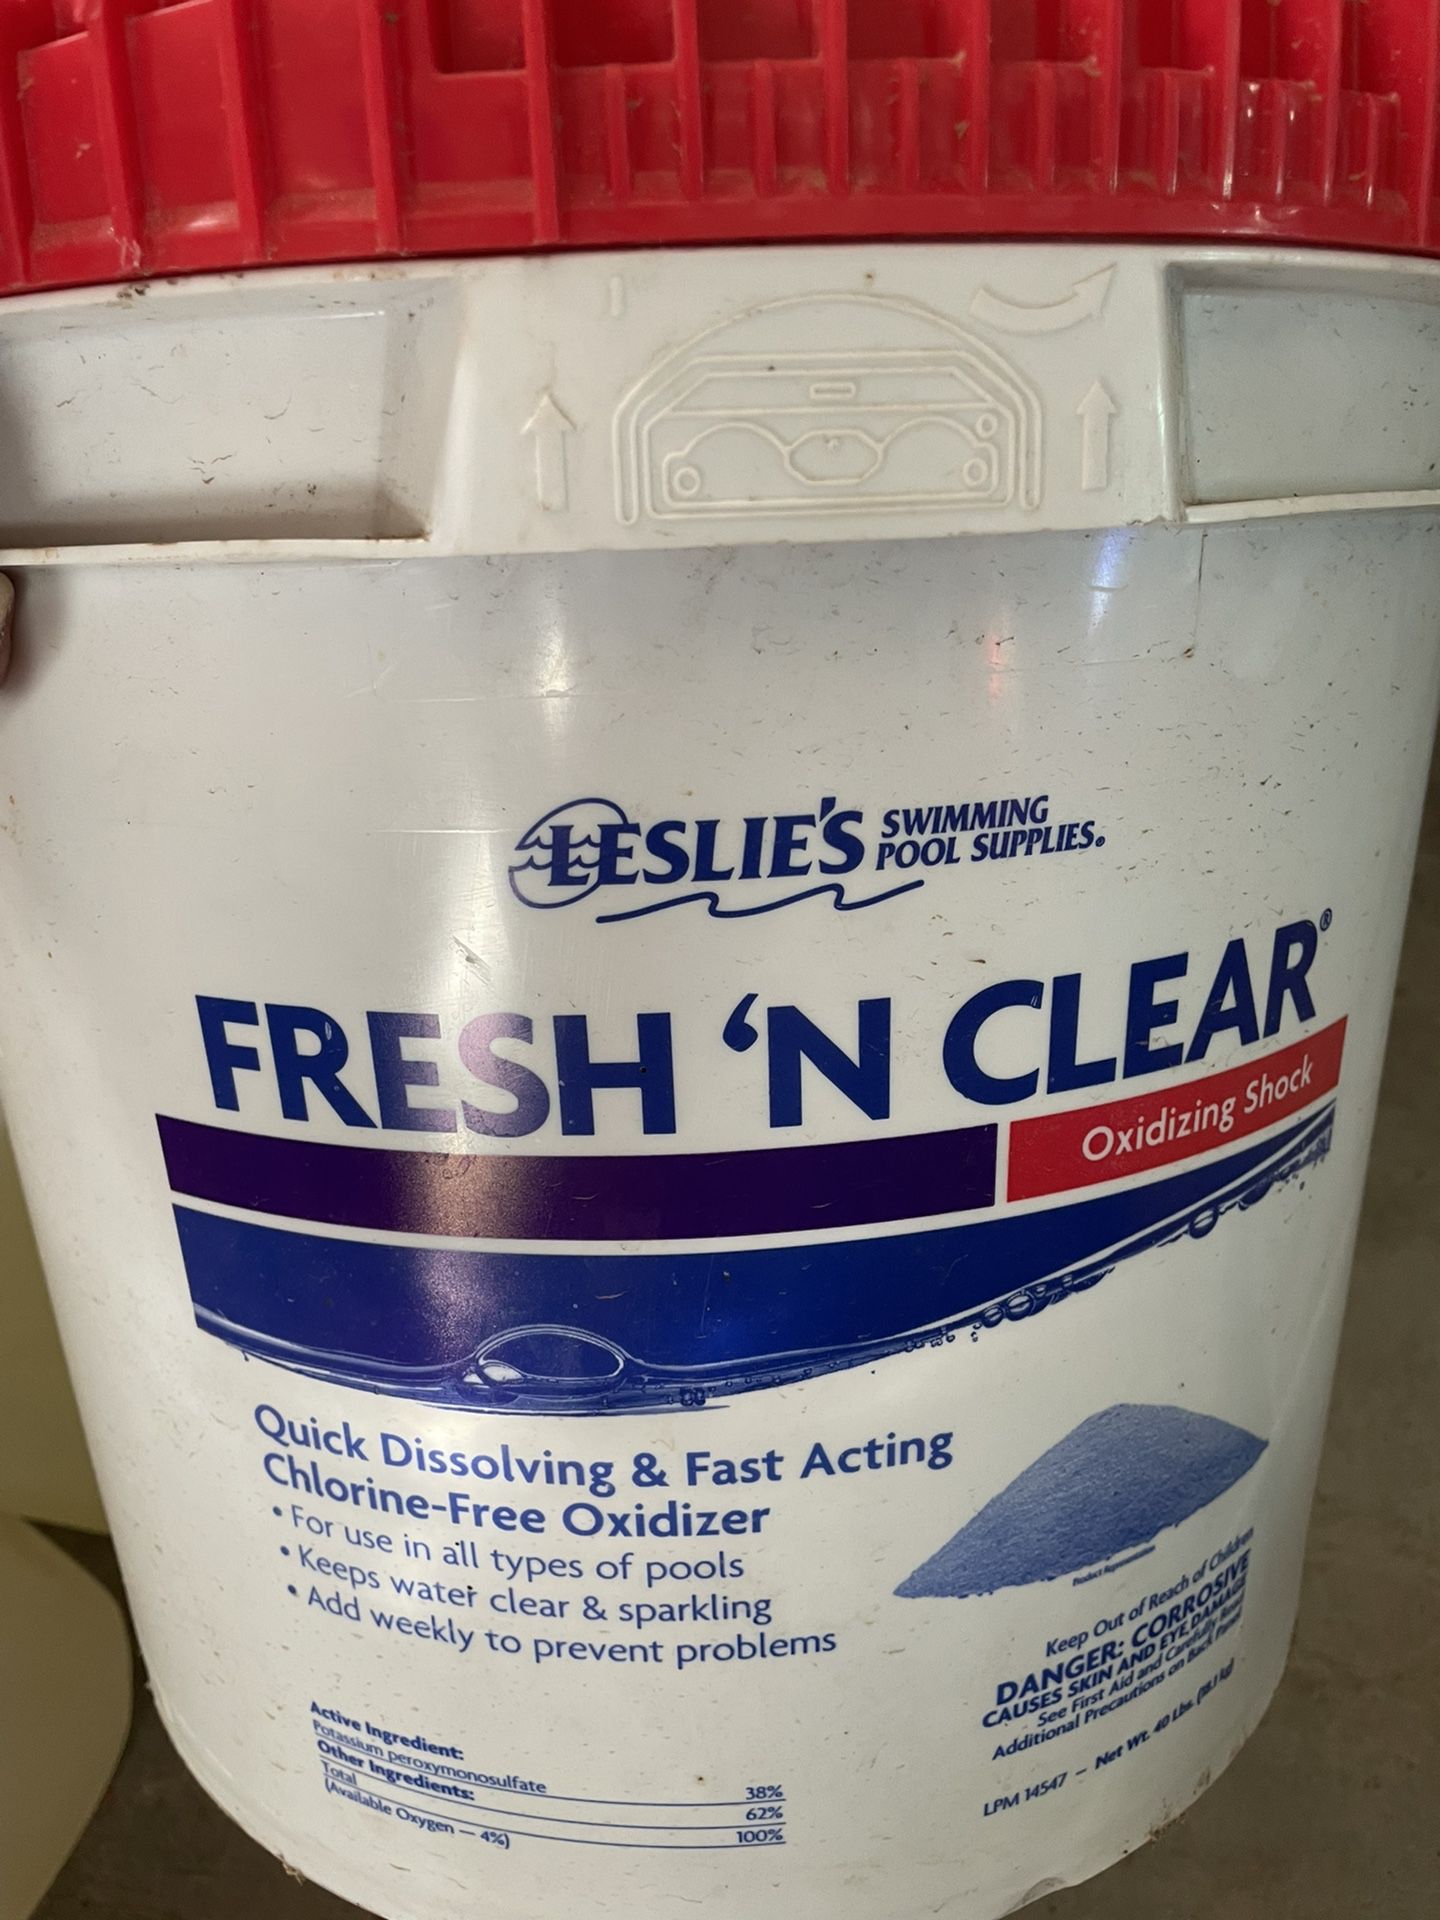 Leslie’s Fresh ‘N Clear 40-lb Bucket Quick Dissolving & Fast Acting Chlorine-Free Oxidizer Shock - NIB!